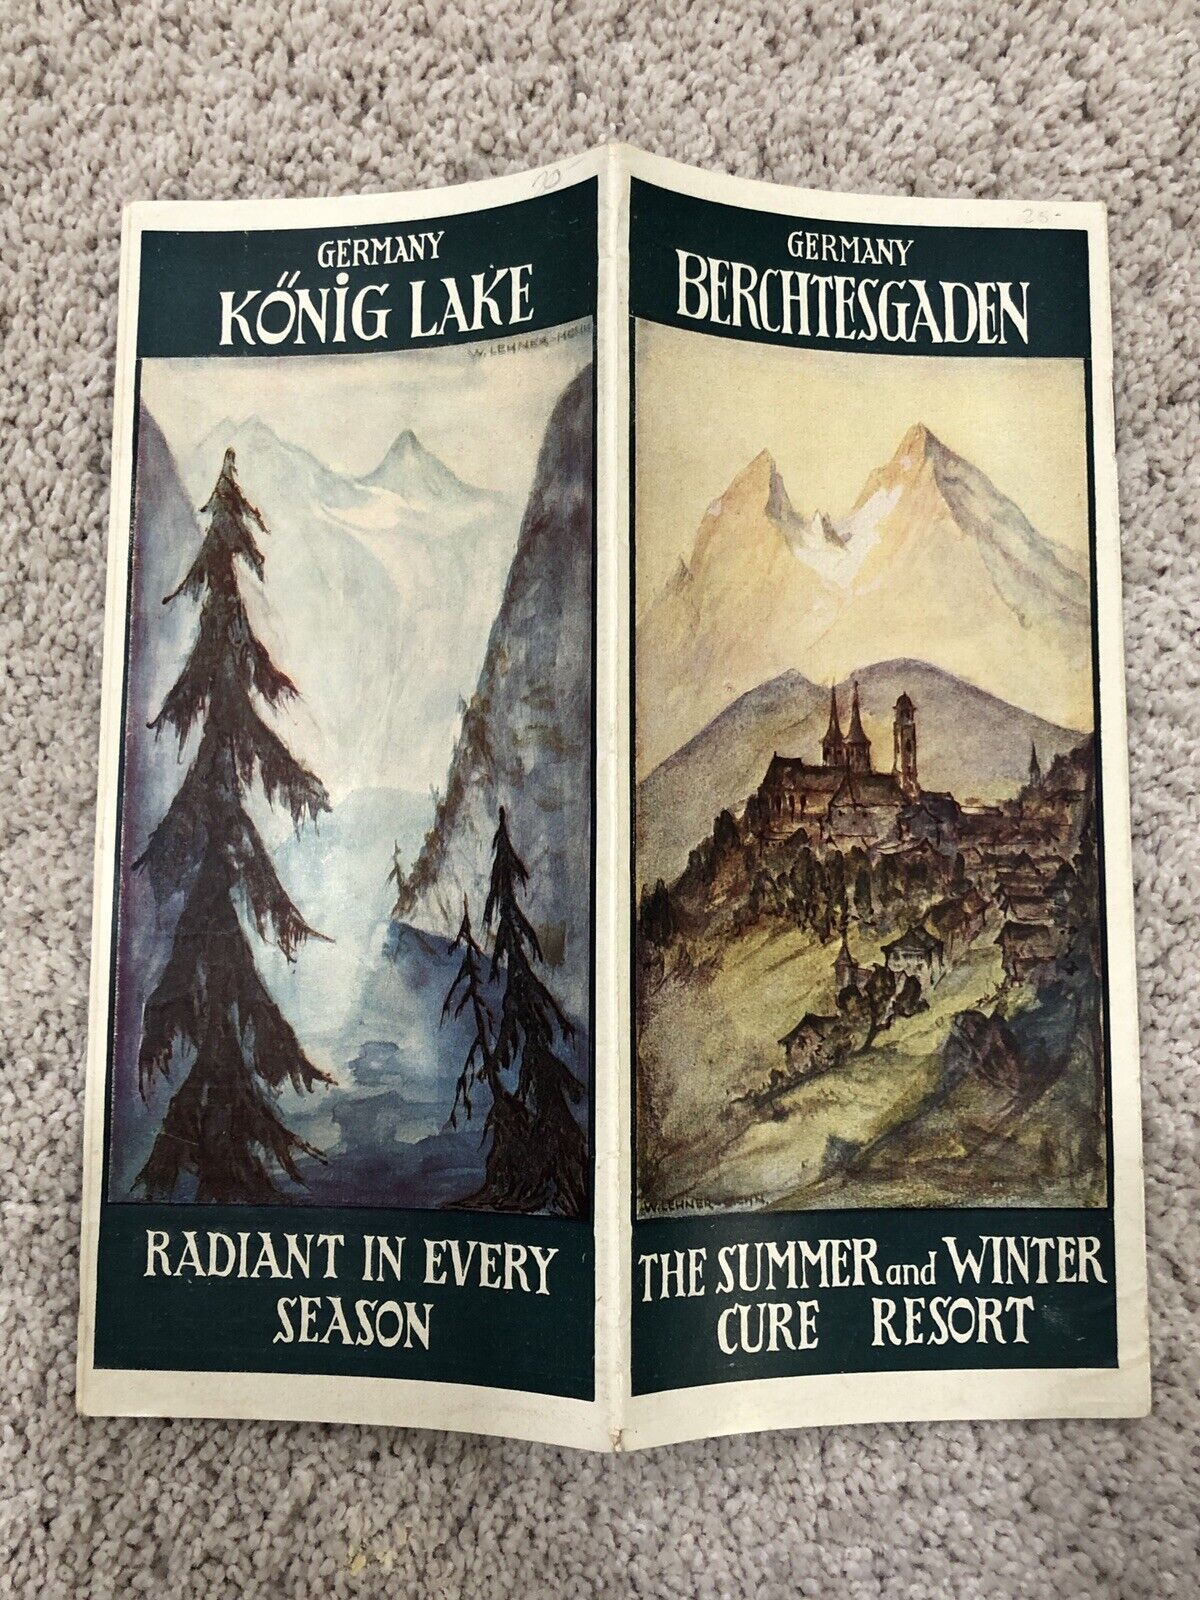 Vintage 1930s Germany Berchtesgaden & Lake Konig Travel Brochure